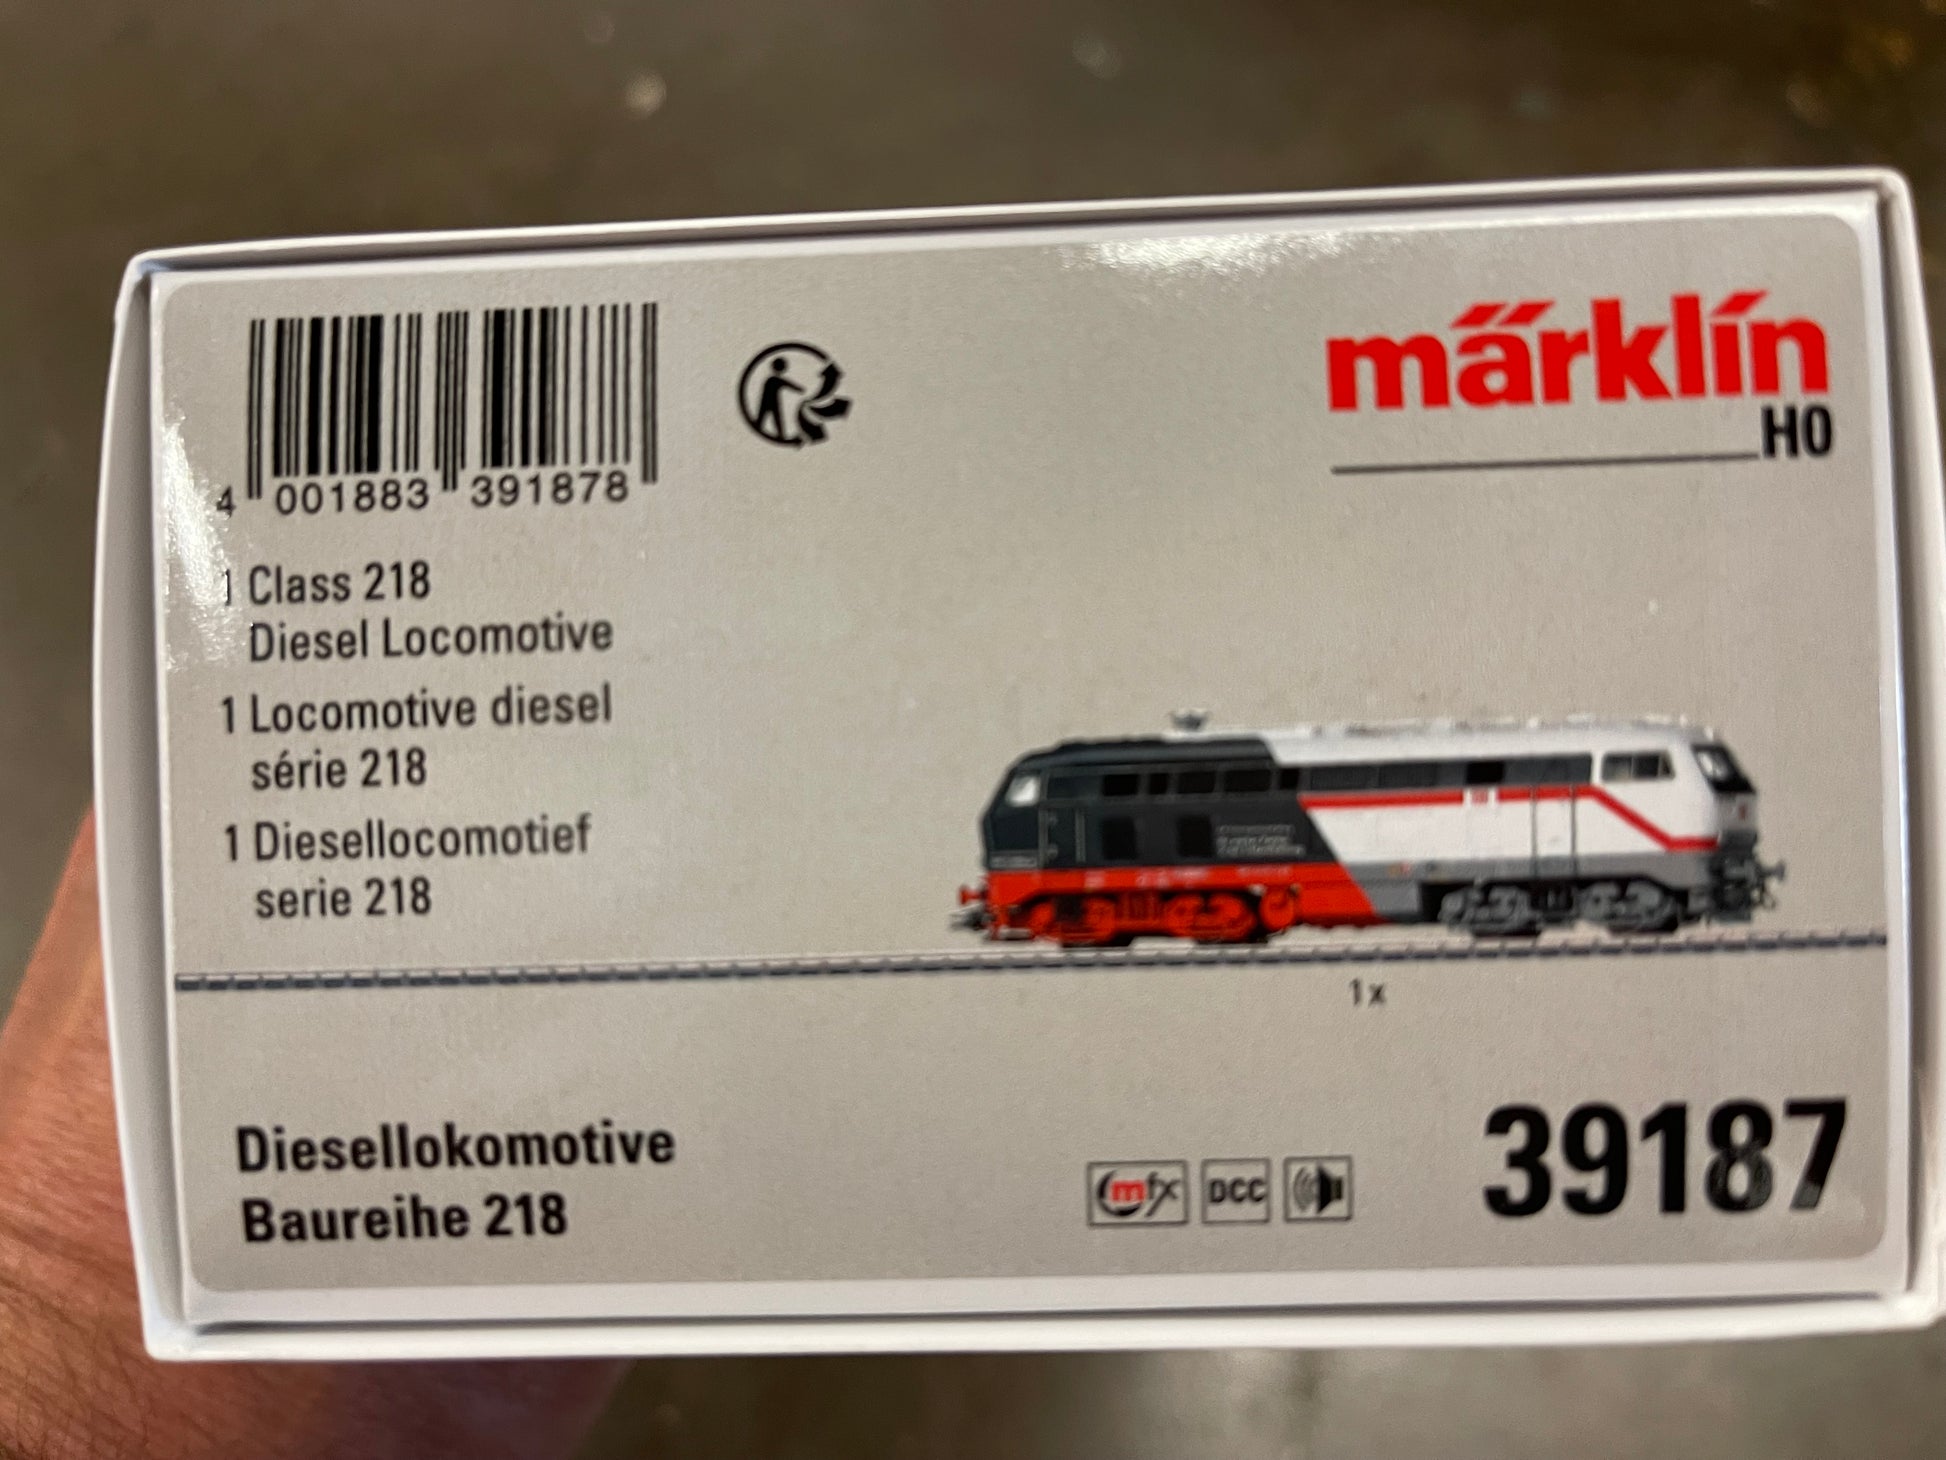 Marklin 39187 - Class 218 Diesel Locomotive Cottbus Piko/Märklin at Ajckids.com